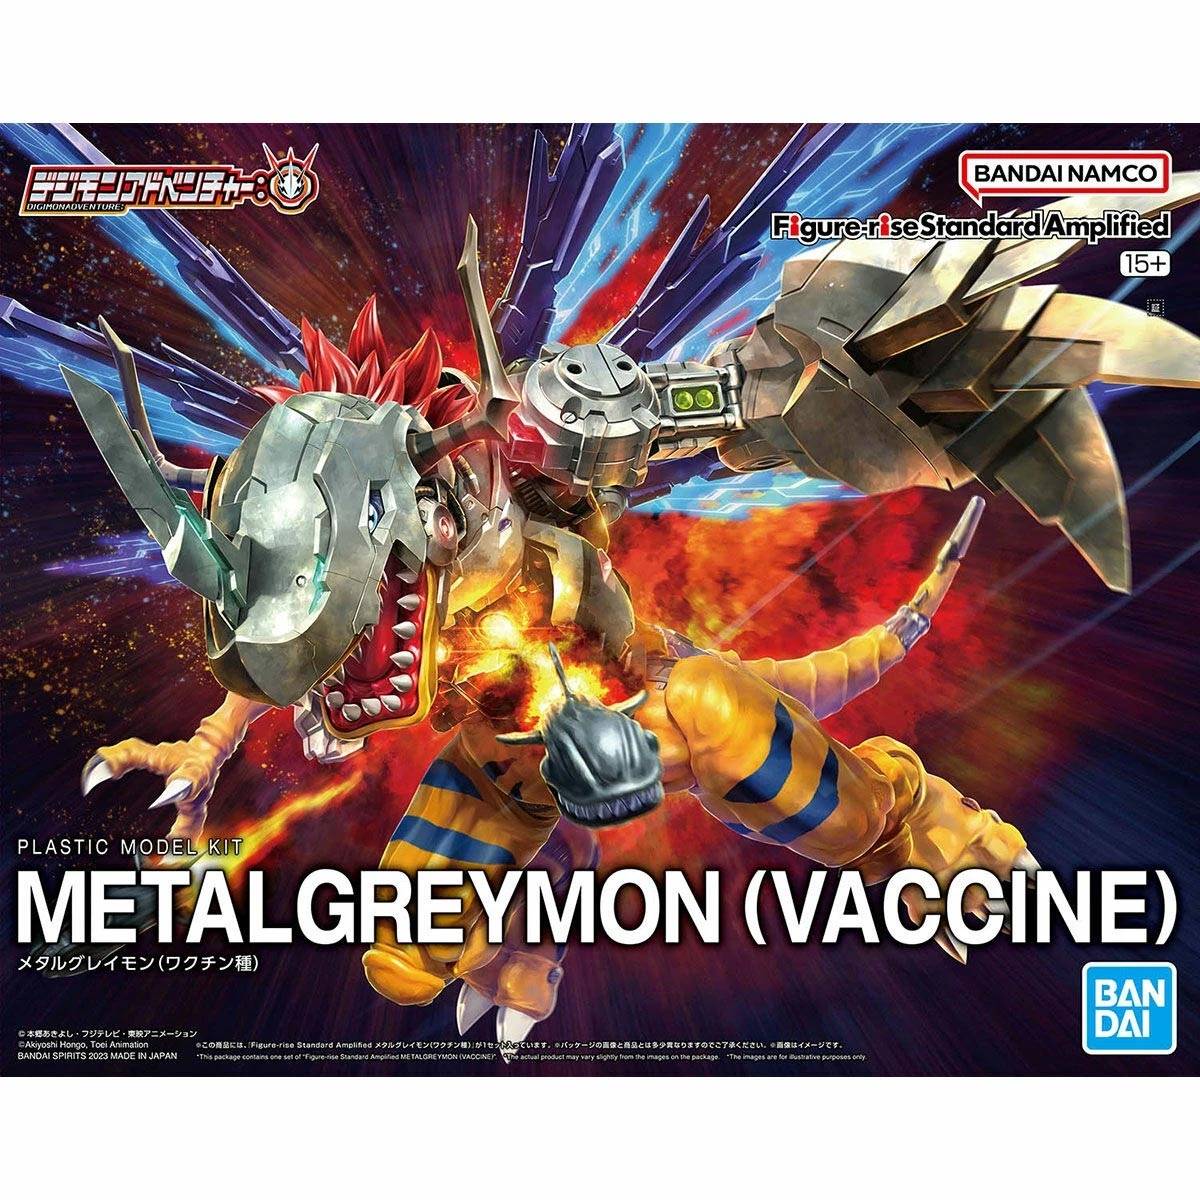 Metalgreymon (Vaccine)...